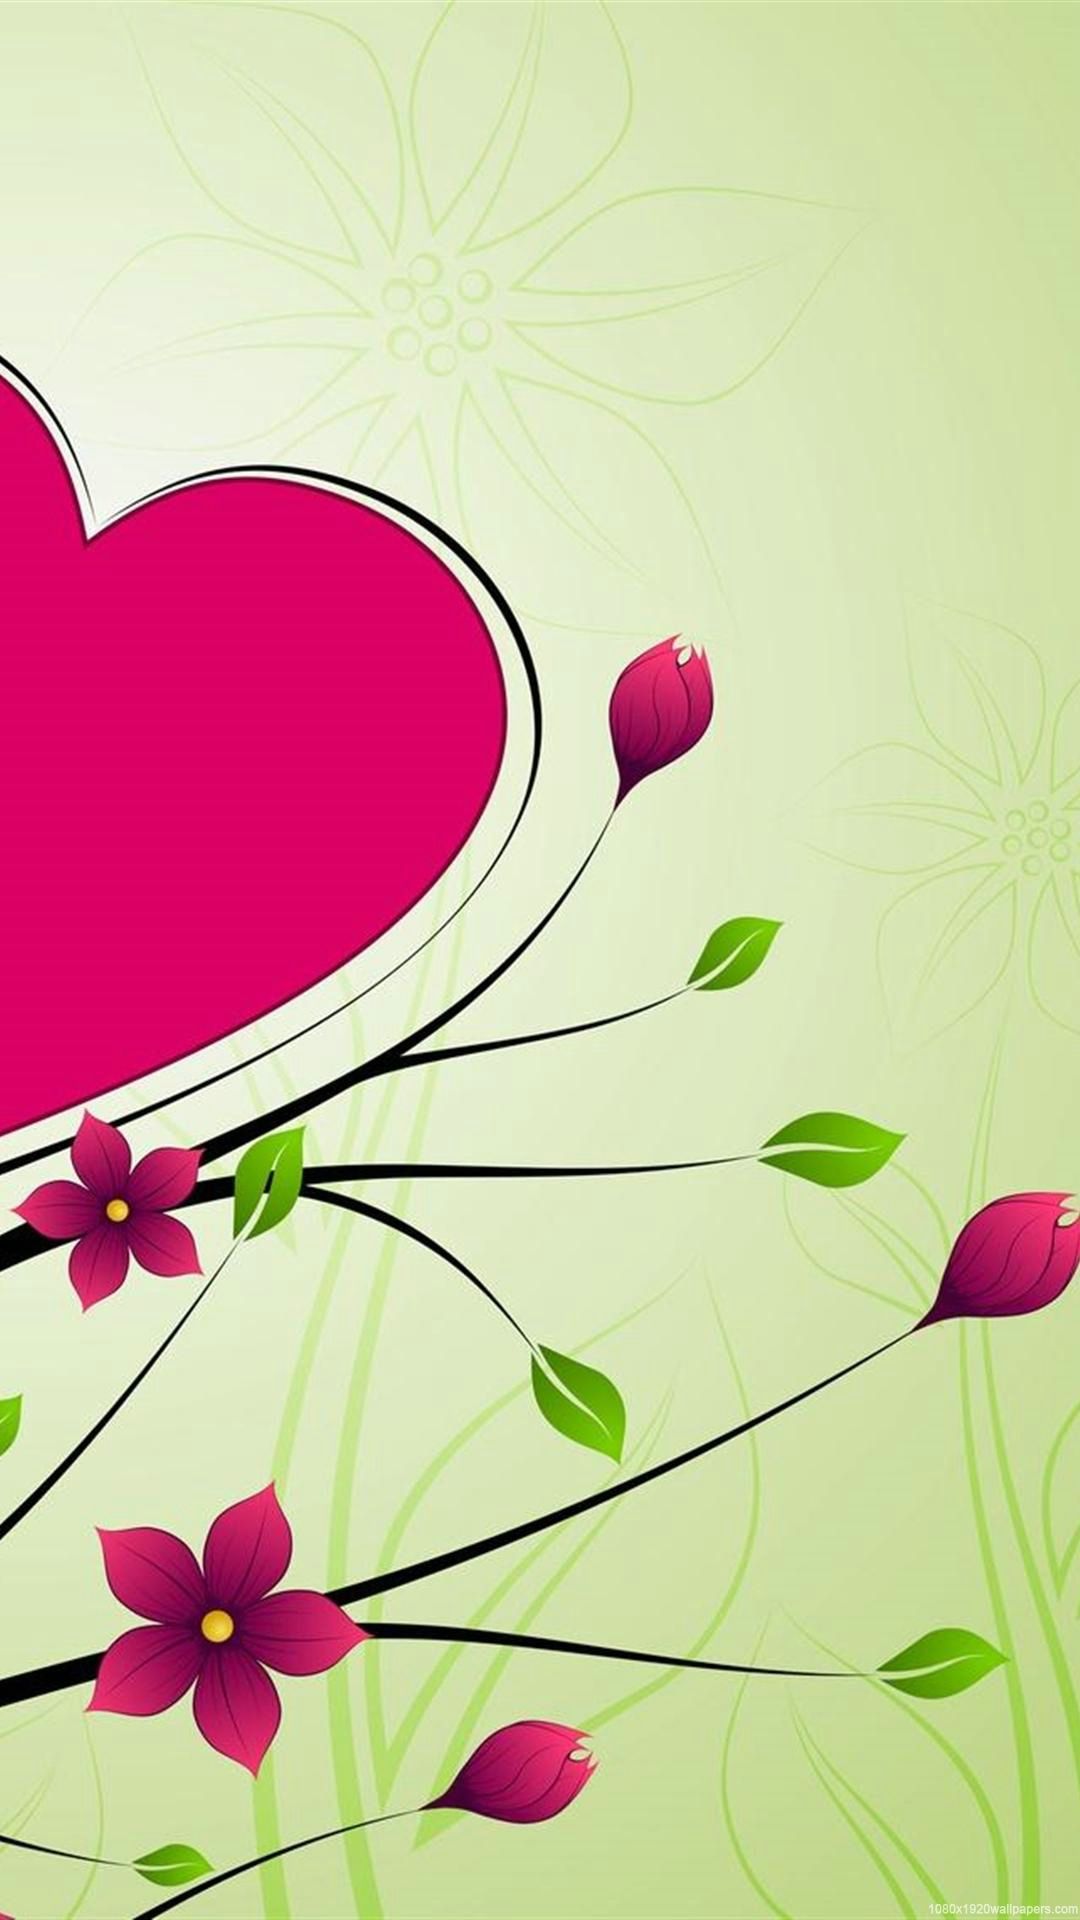 Rose Love Heart Flowers Design .wallpapertip.com